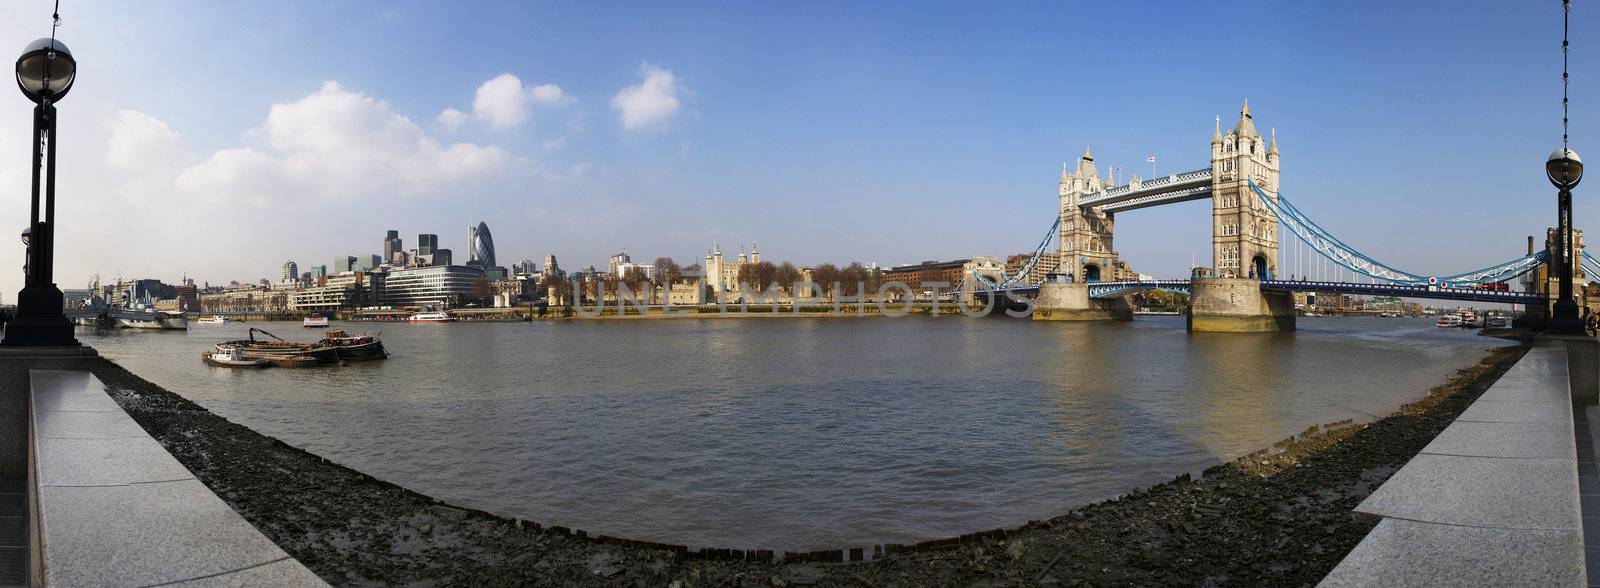 London panoramic view by dutourdumonde